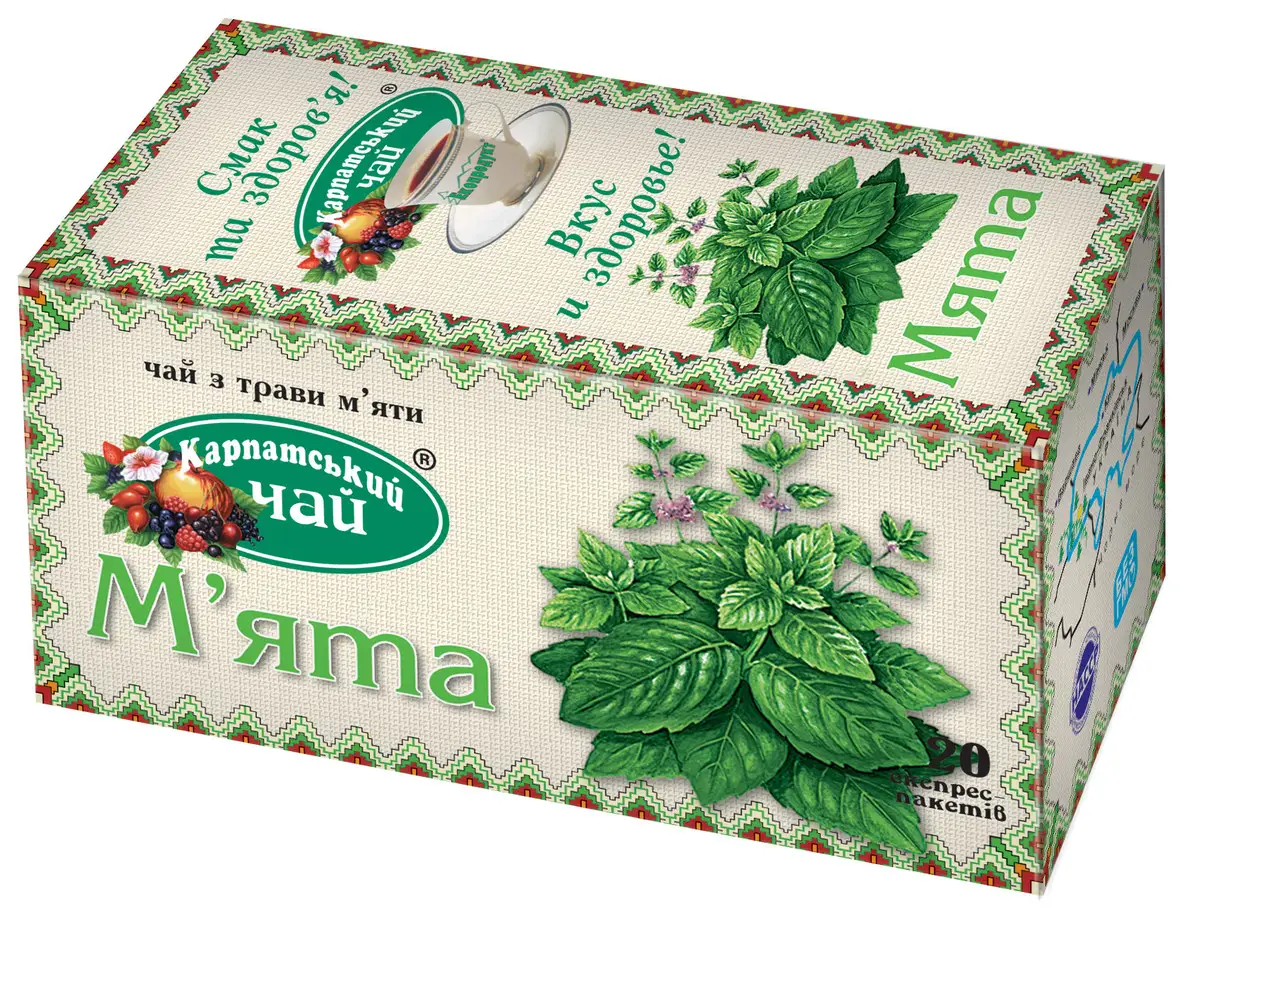 Carpathian Tea Mint Herbal Tea 42pcs